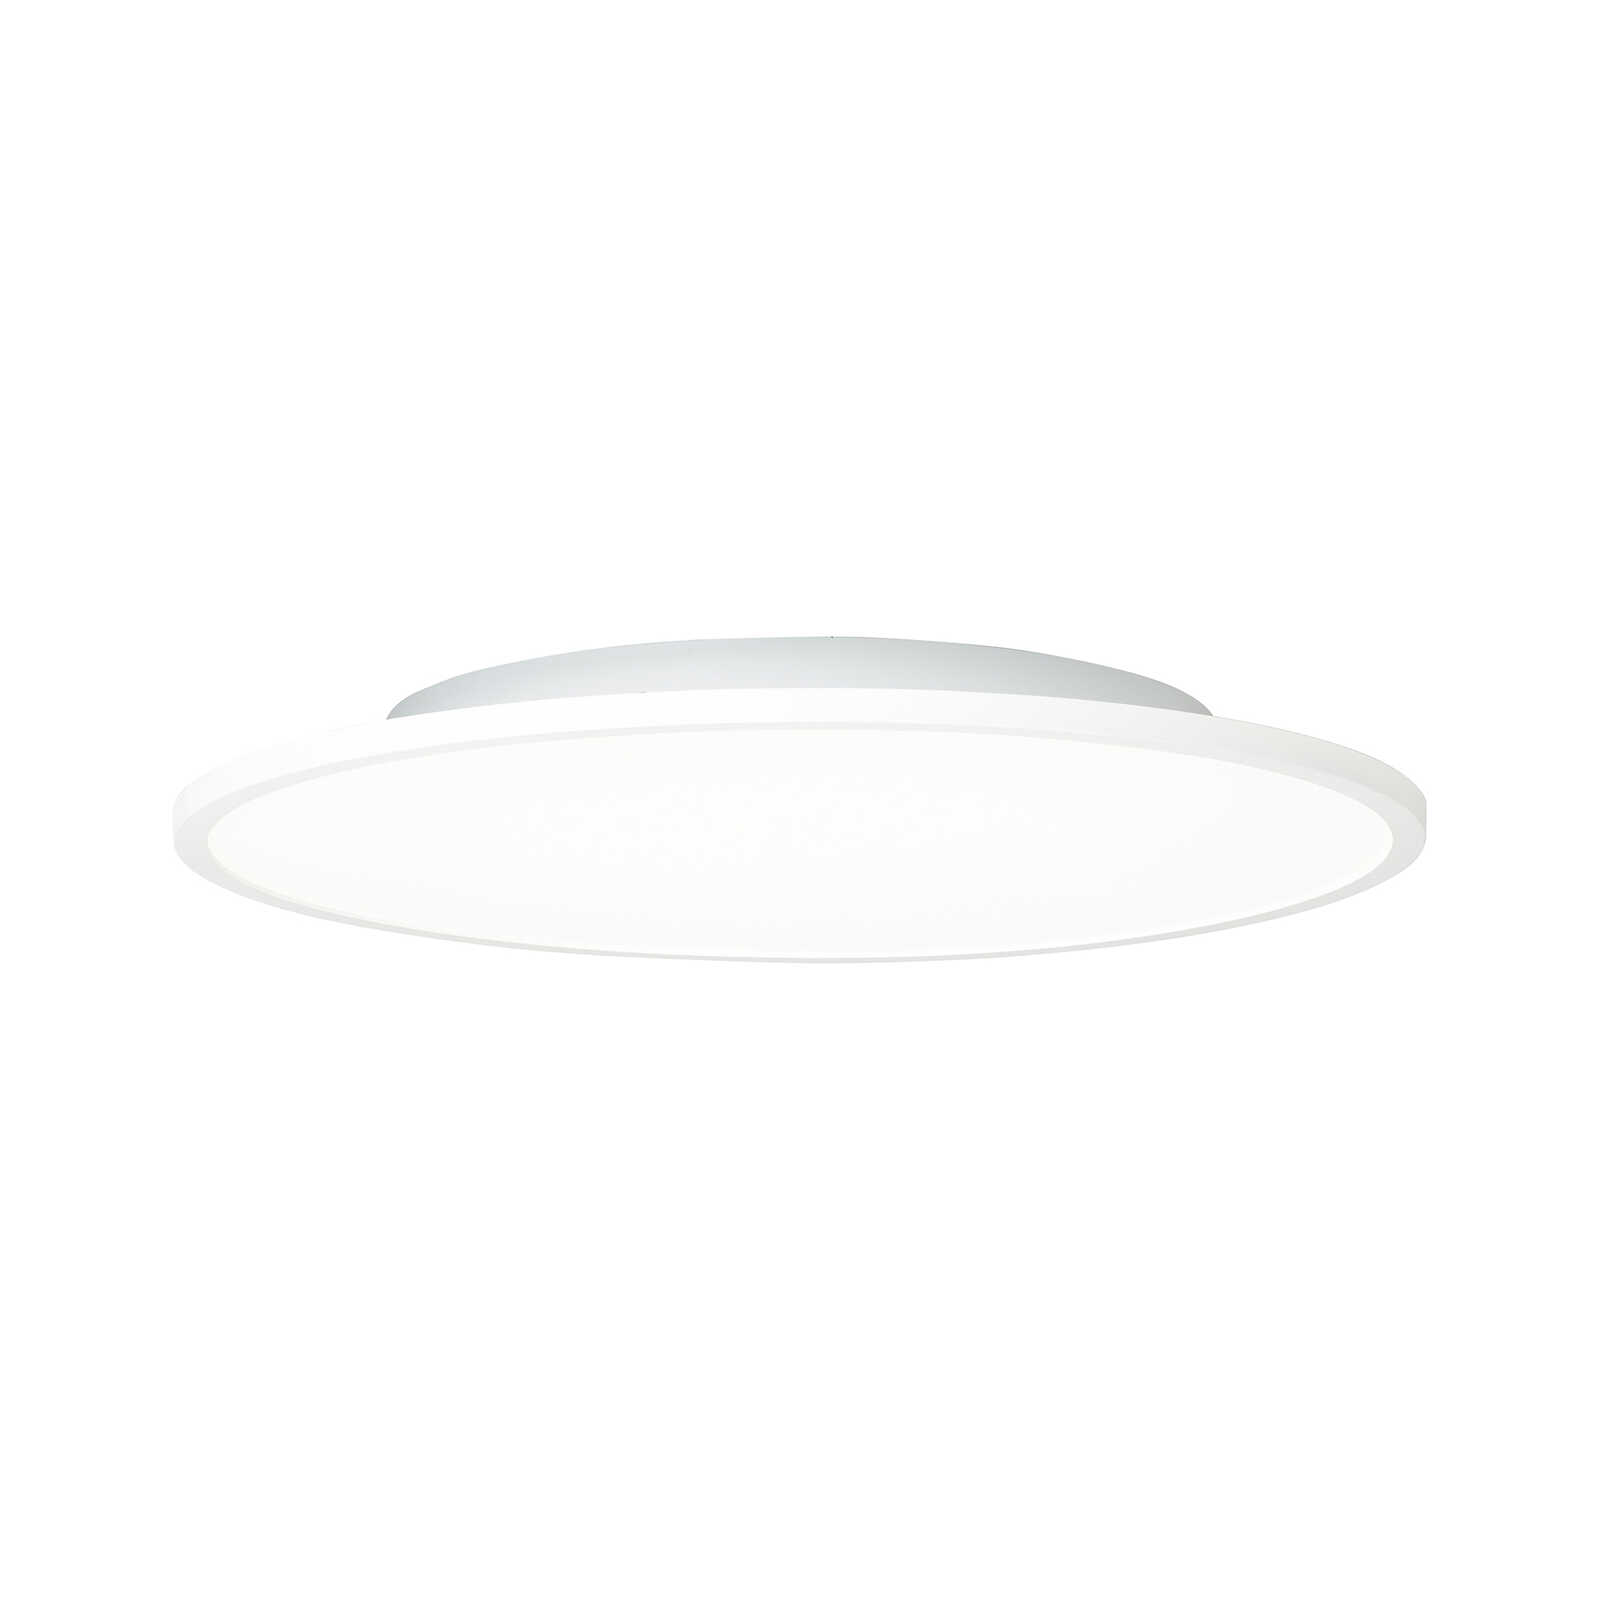 Plastic ceiling light - Constantin 7 - White
